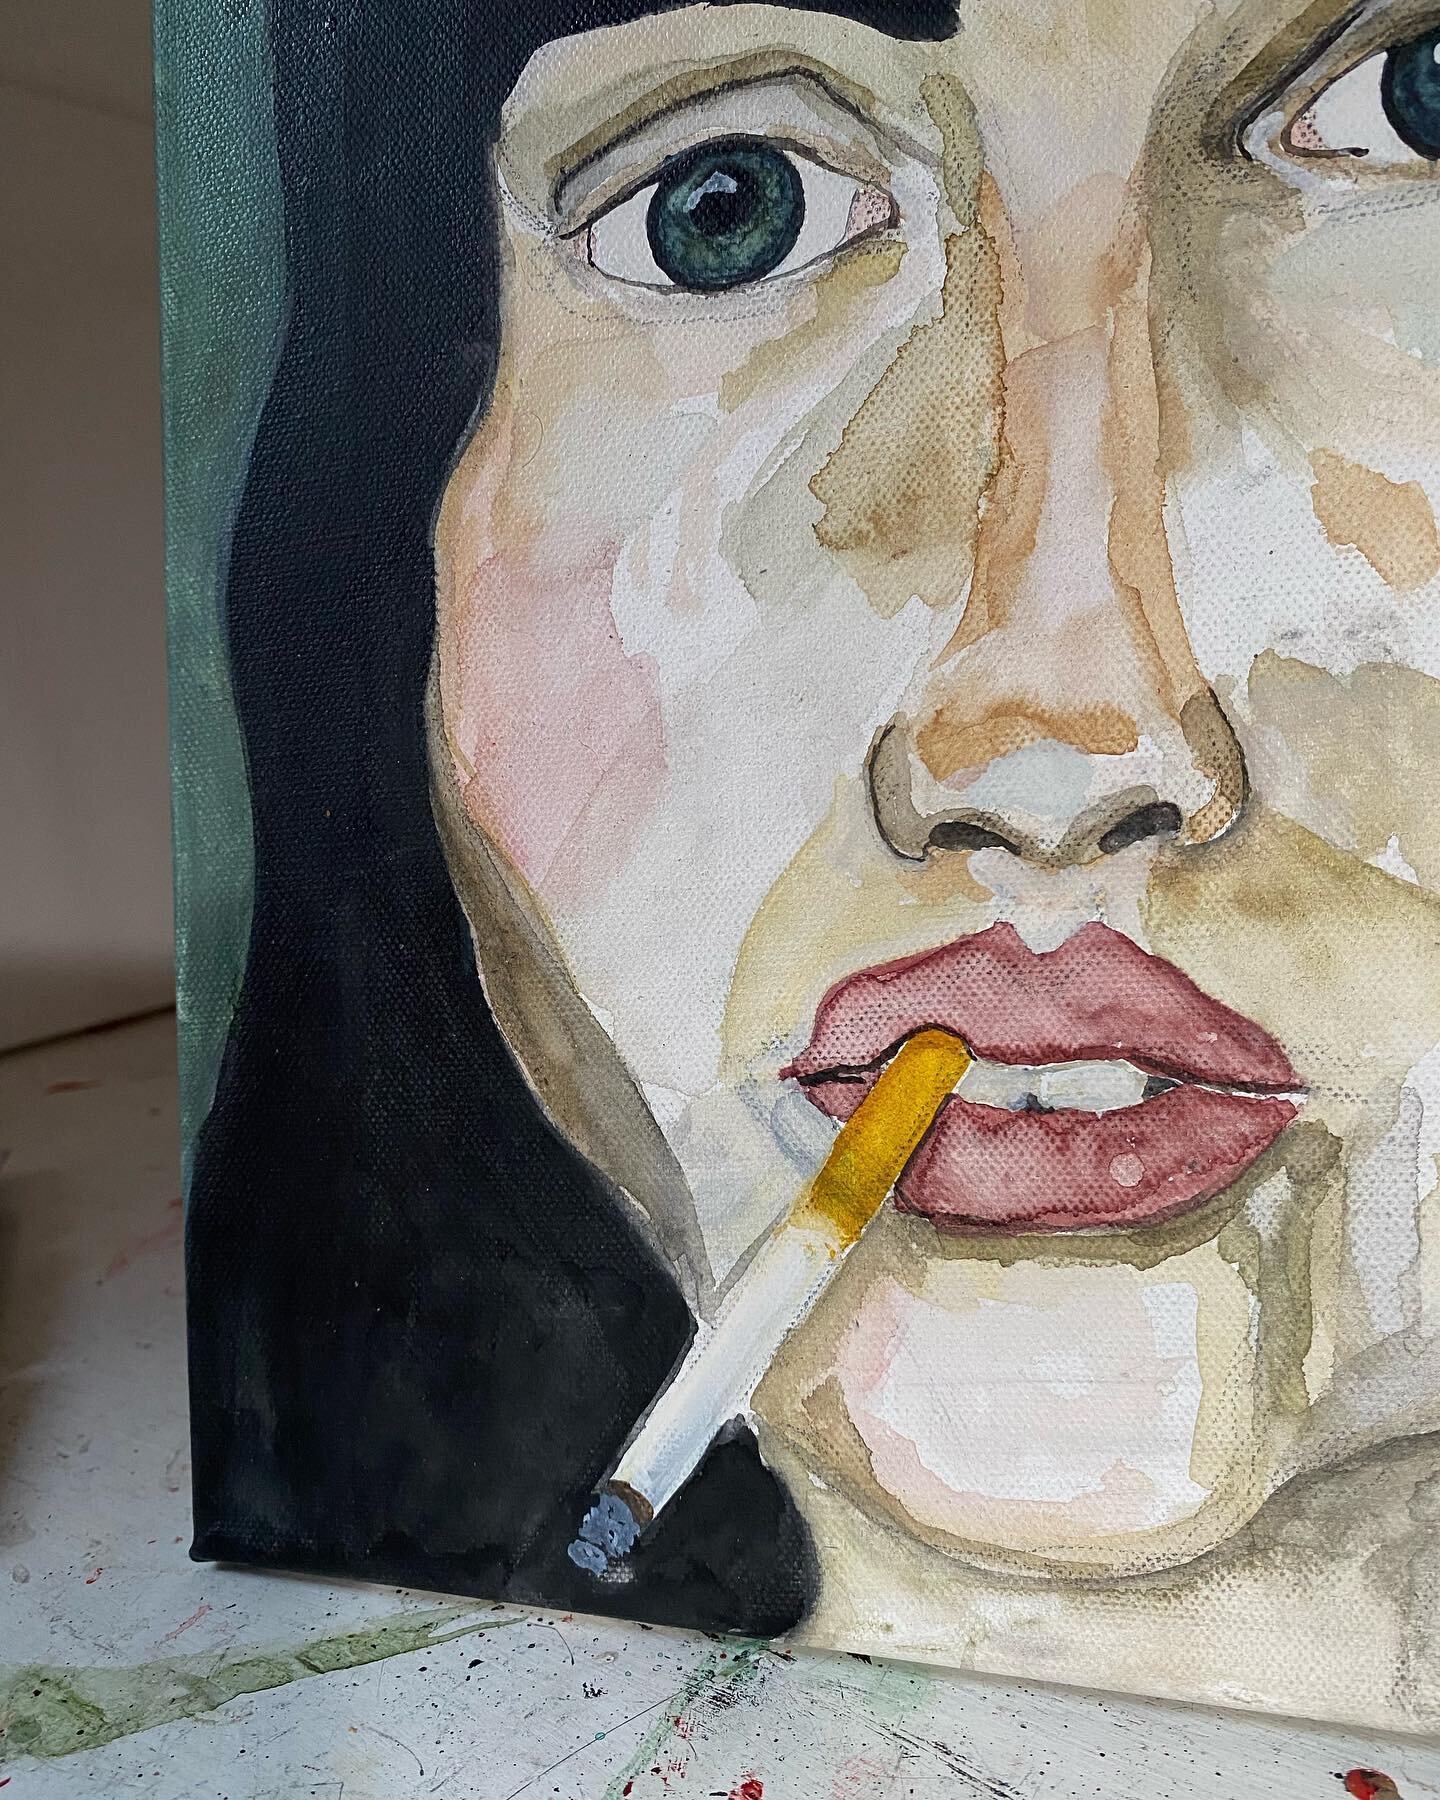 She knows her way.
.
.

Work in progress,
watercolor on canvas,
30 x 24 cm
.
.
.

#portrait #women #cigarette #confidence #strength #process #watercolor #canvas #painter #contemporaryart